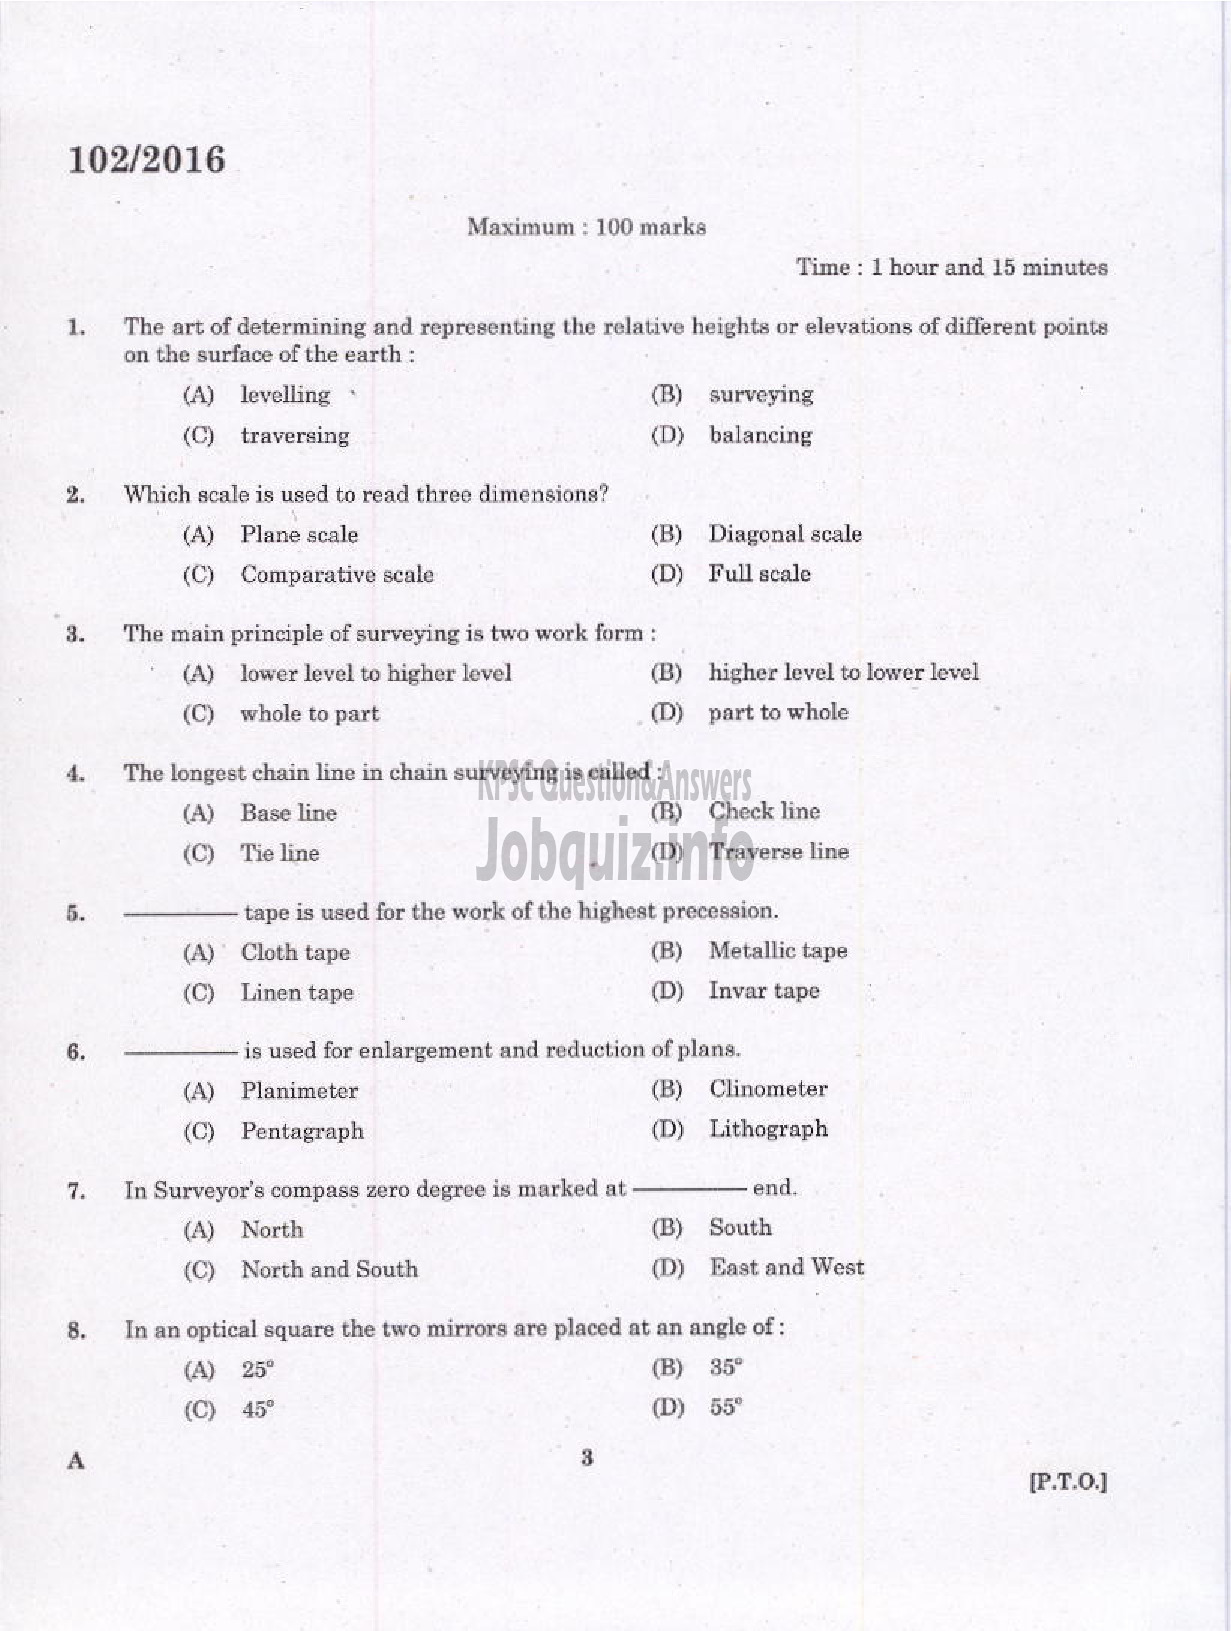 Kerala PSC Question Paper - SURVEYOR GR II SURVEY AND LAND RECORDS-1